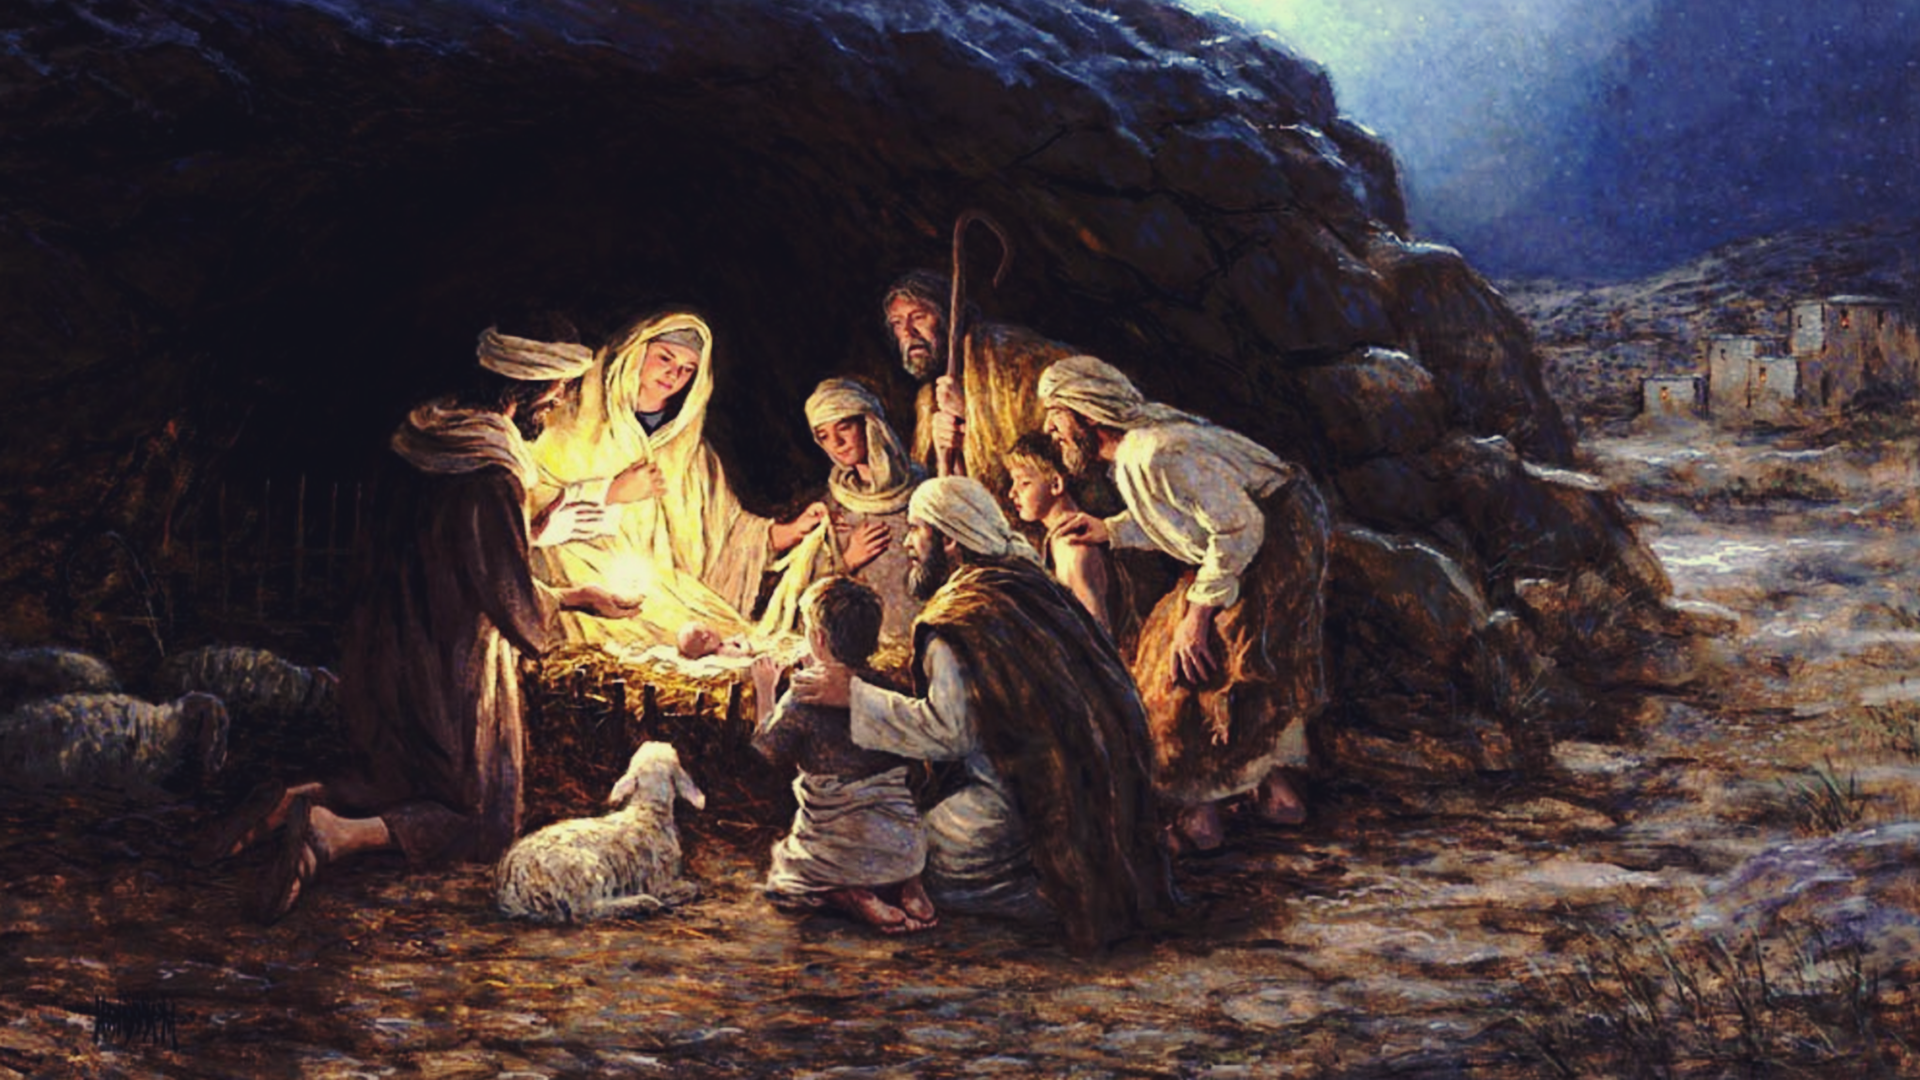 Jesus Christ Christmas Lights Virgin Mary Religion Painting Myth 1920x1080